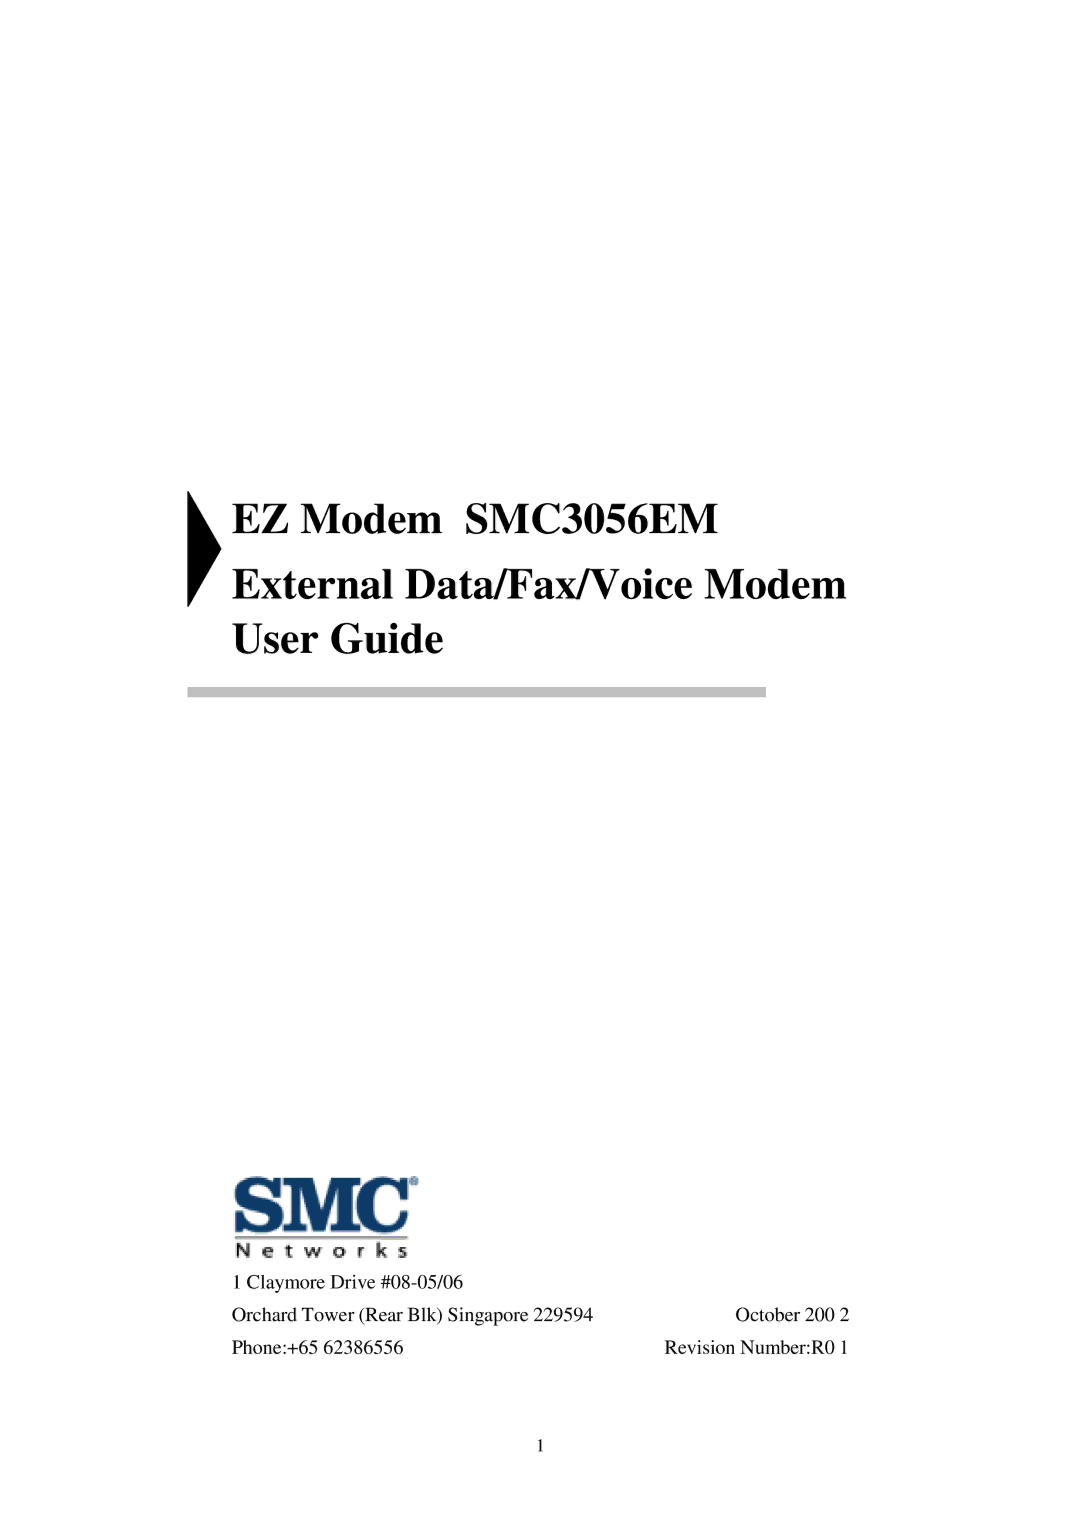 SMC Networks manual EZ Modem SMC3056EM External Data/Fax/Voice Modem User Guide 